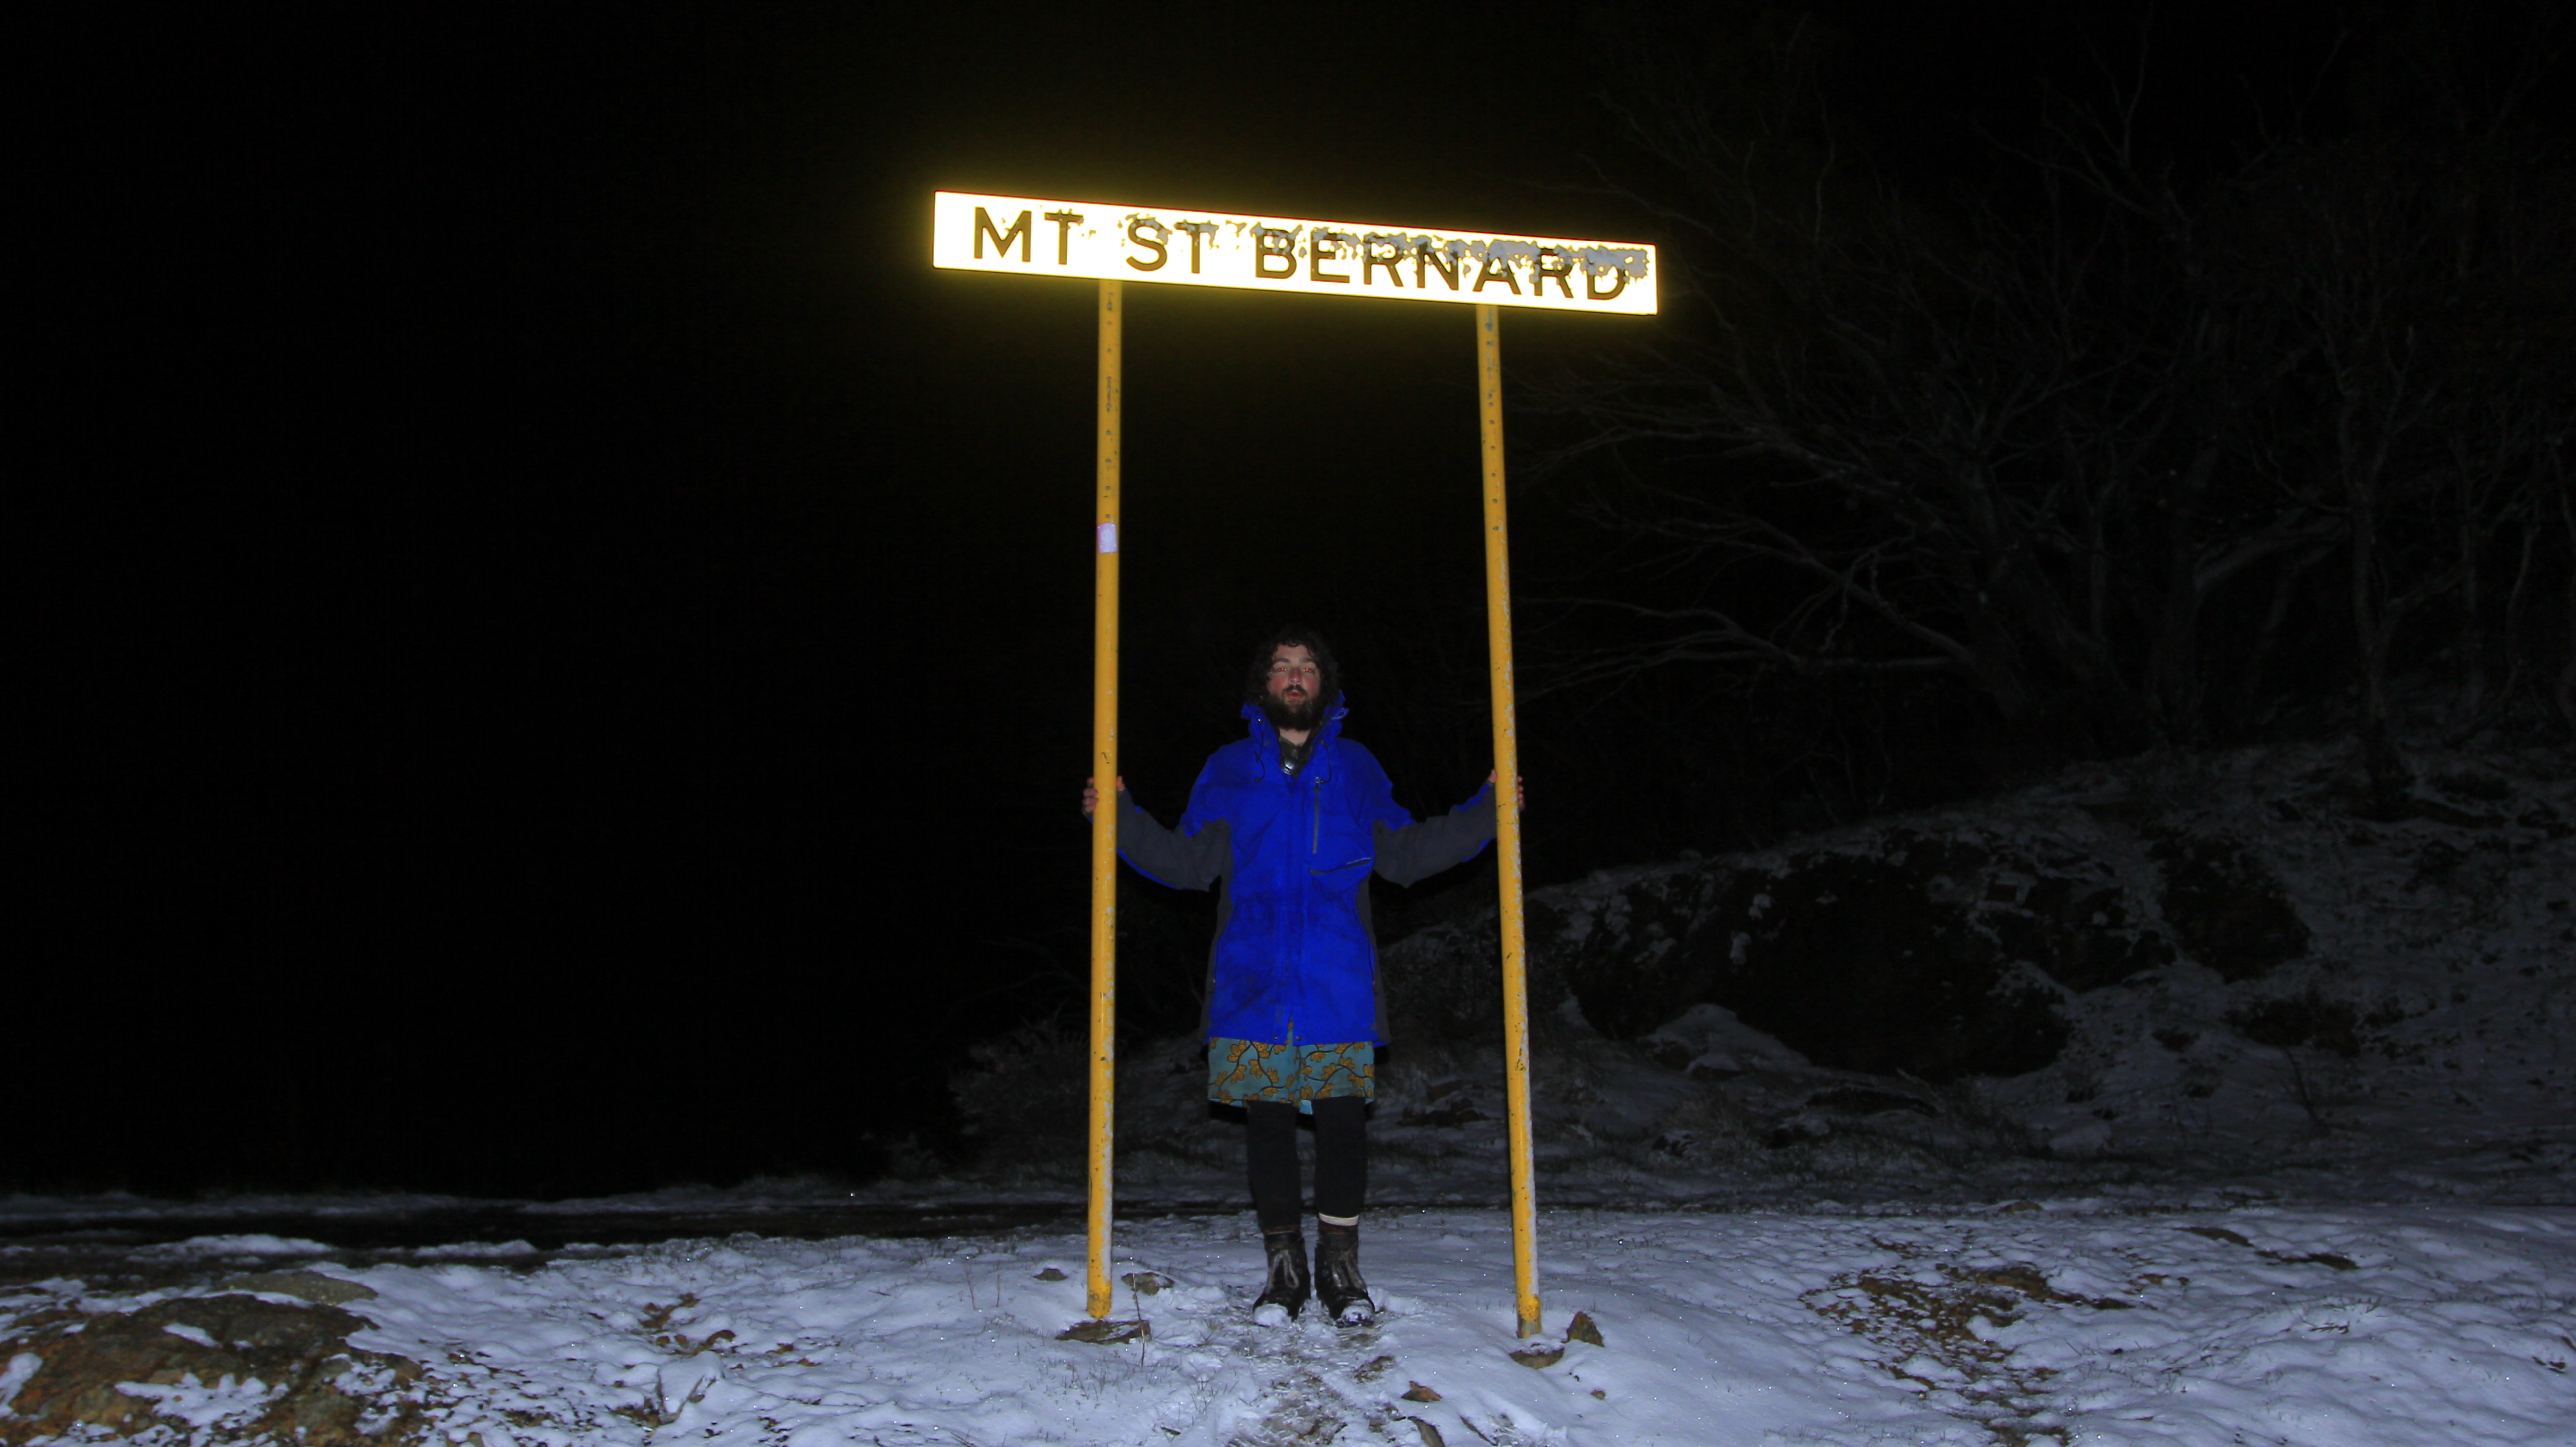 Almost 40km walk through the snow, AAWT Mt St Bernard and Hotham